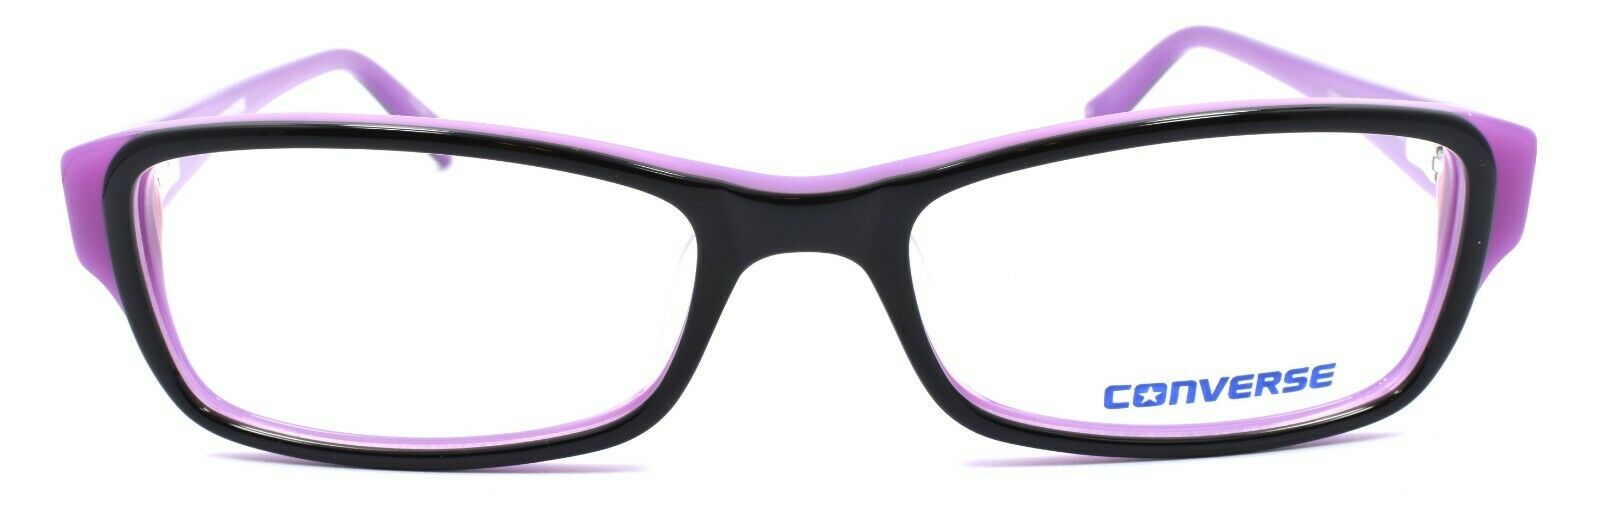 2-CONVERSE Q008 UF Women's Eyeglasses Frames 50-16-135 Black + CASE-751286245295-IKSpecs